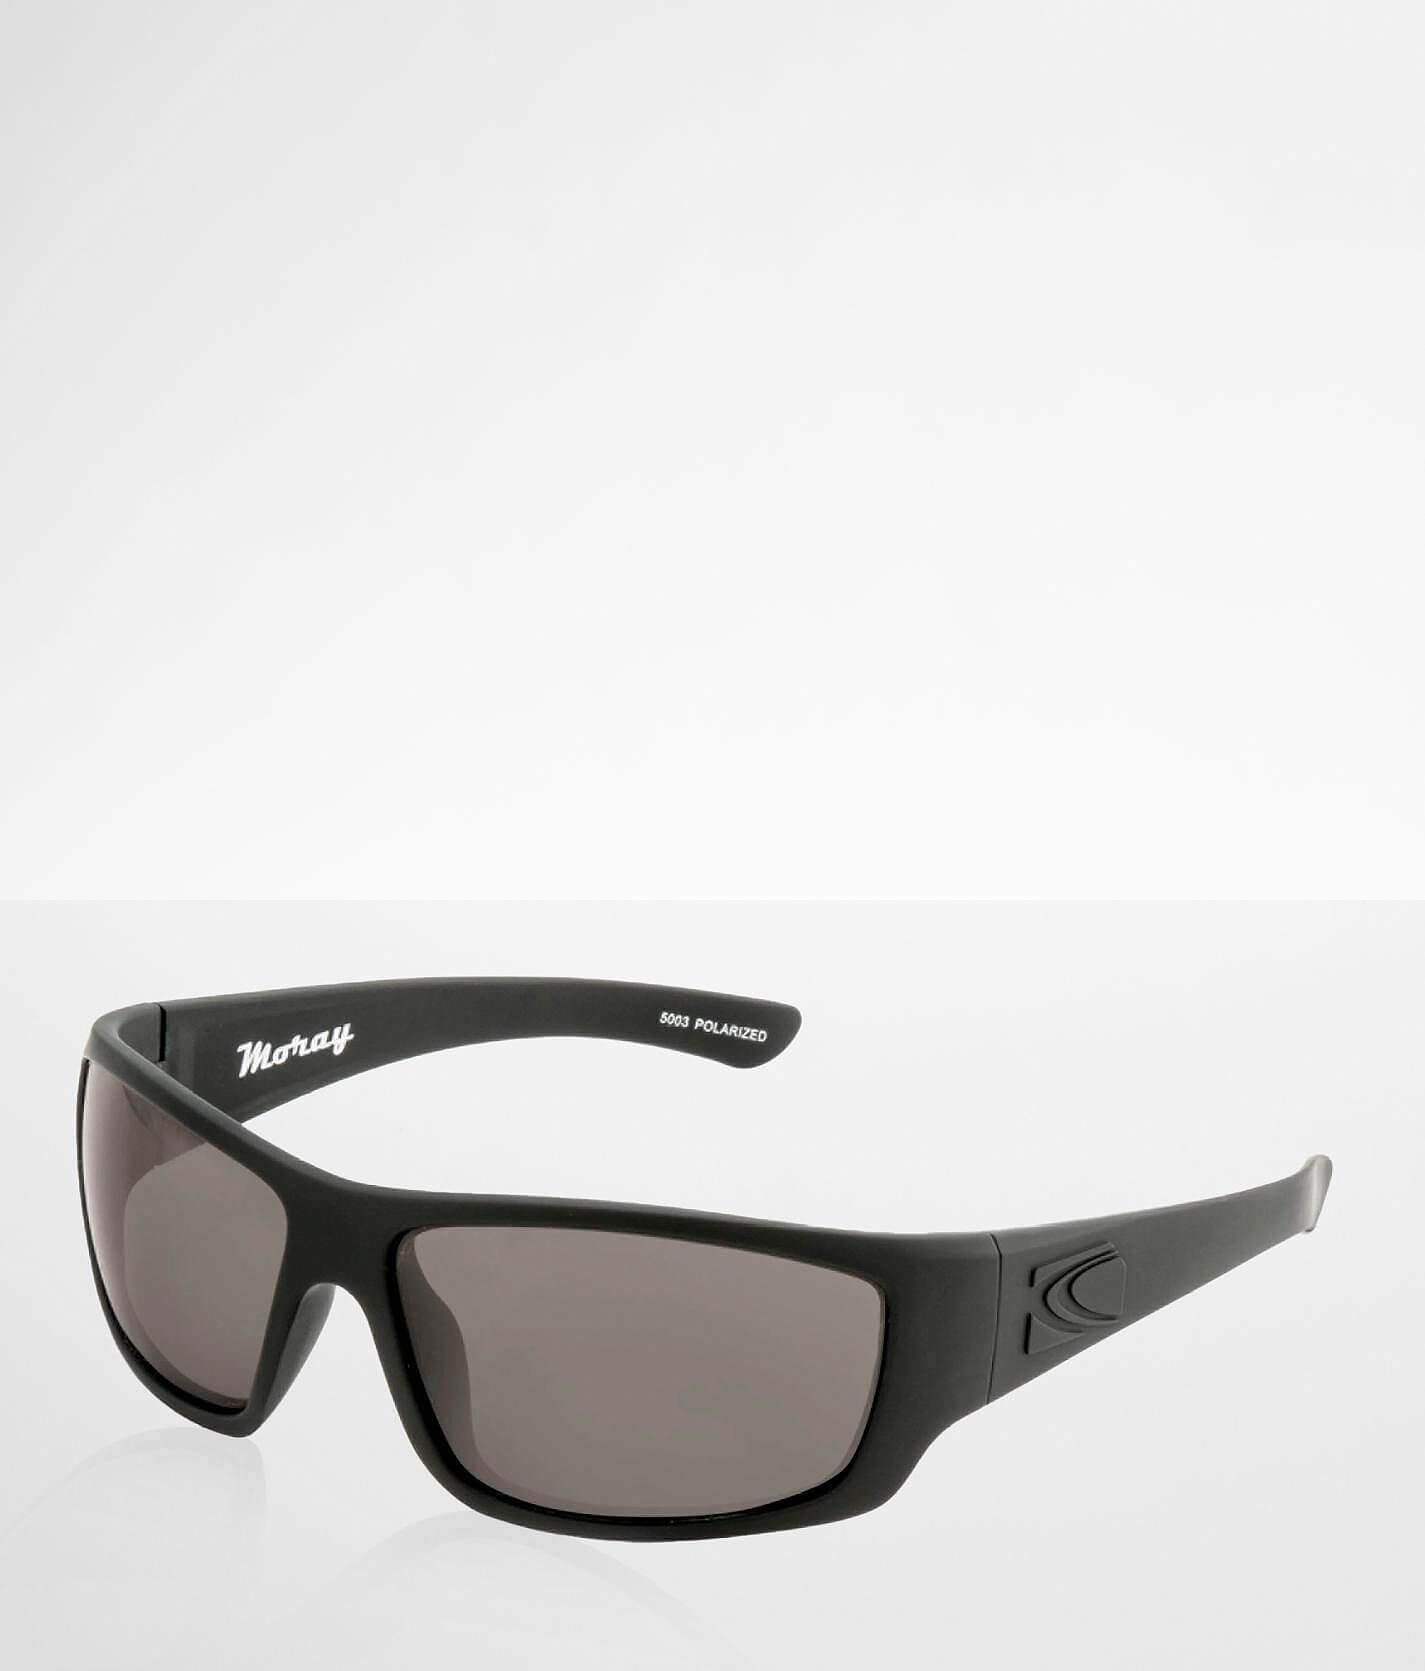  MOORAY Polarized Sunglasses for Men UV Protection